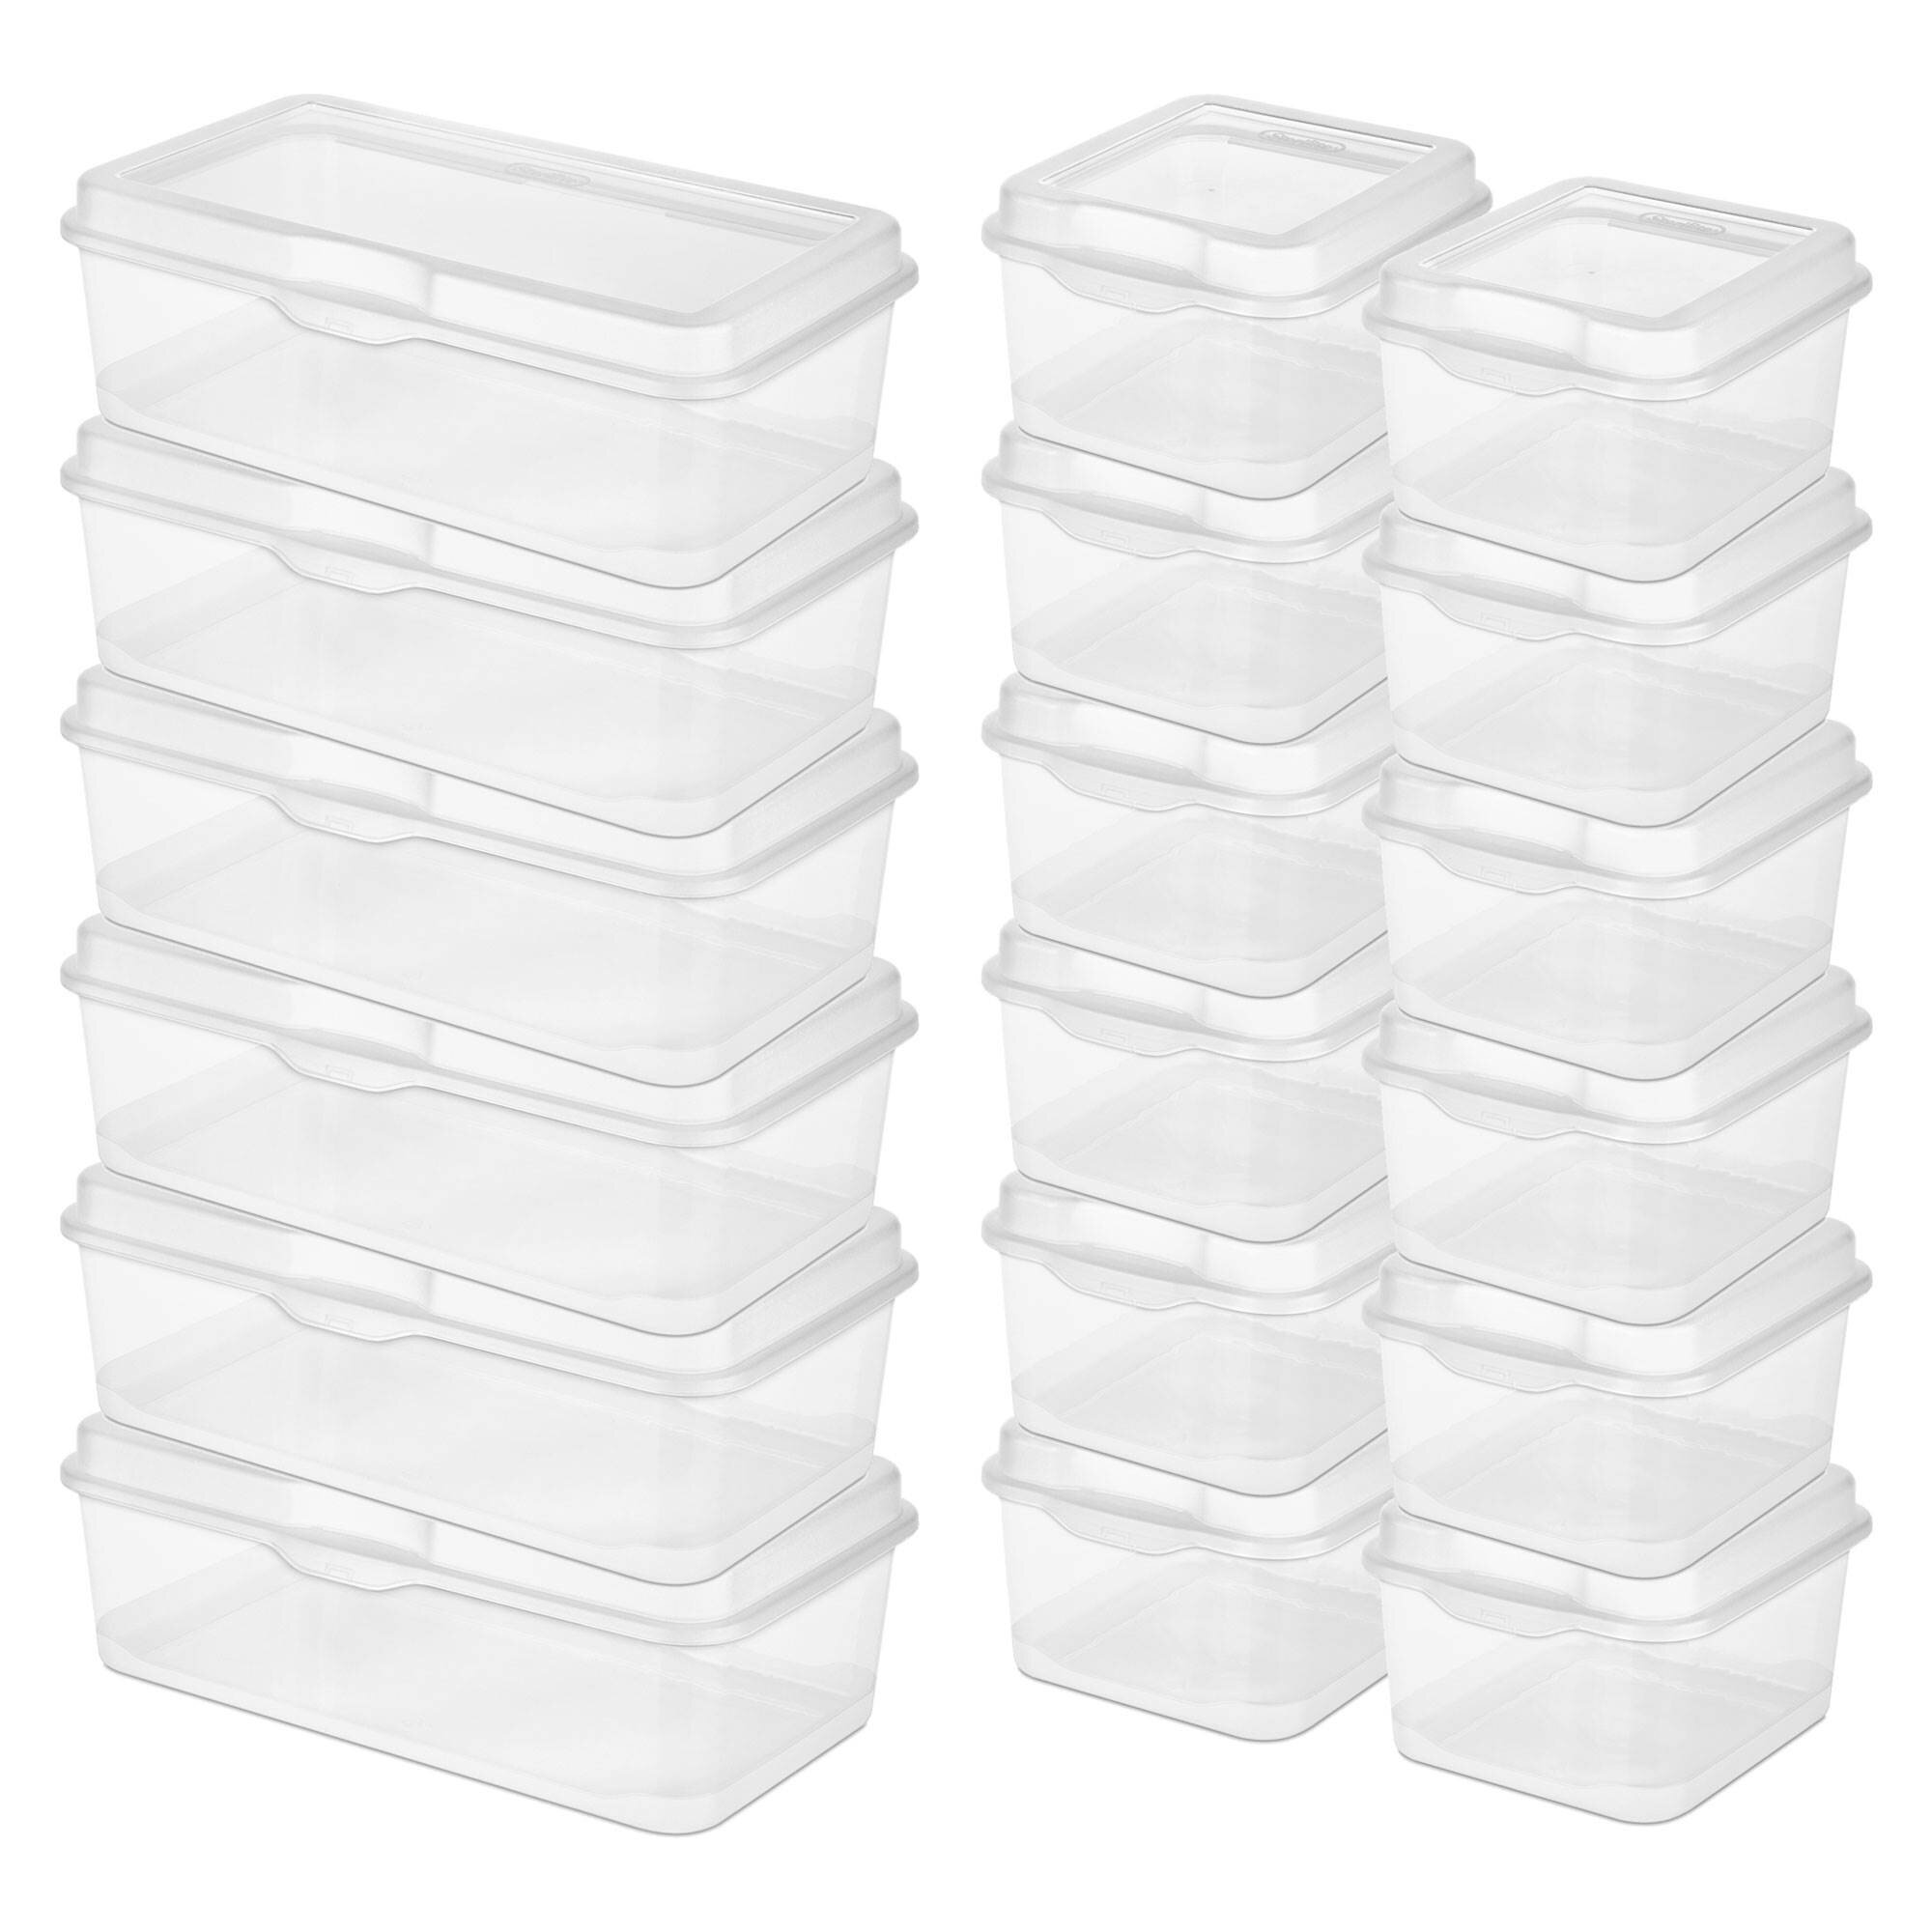 Sterilite 18038612 Plastic FlipTop Latching Storage Container, Clear